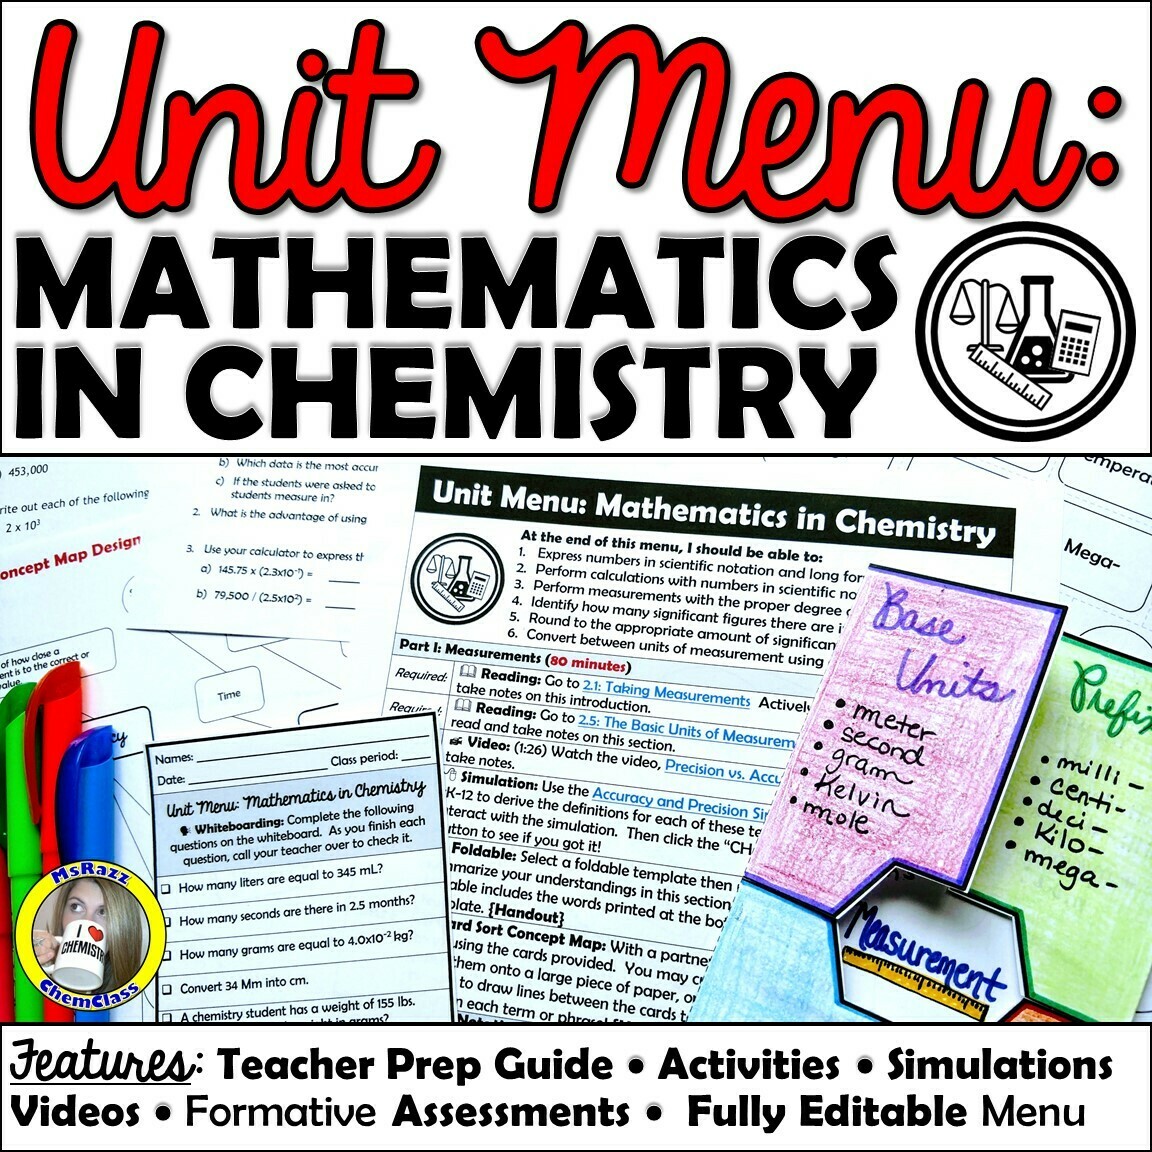 Unit Menu: Mathematics in Chemistry